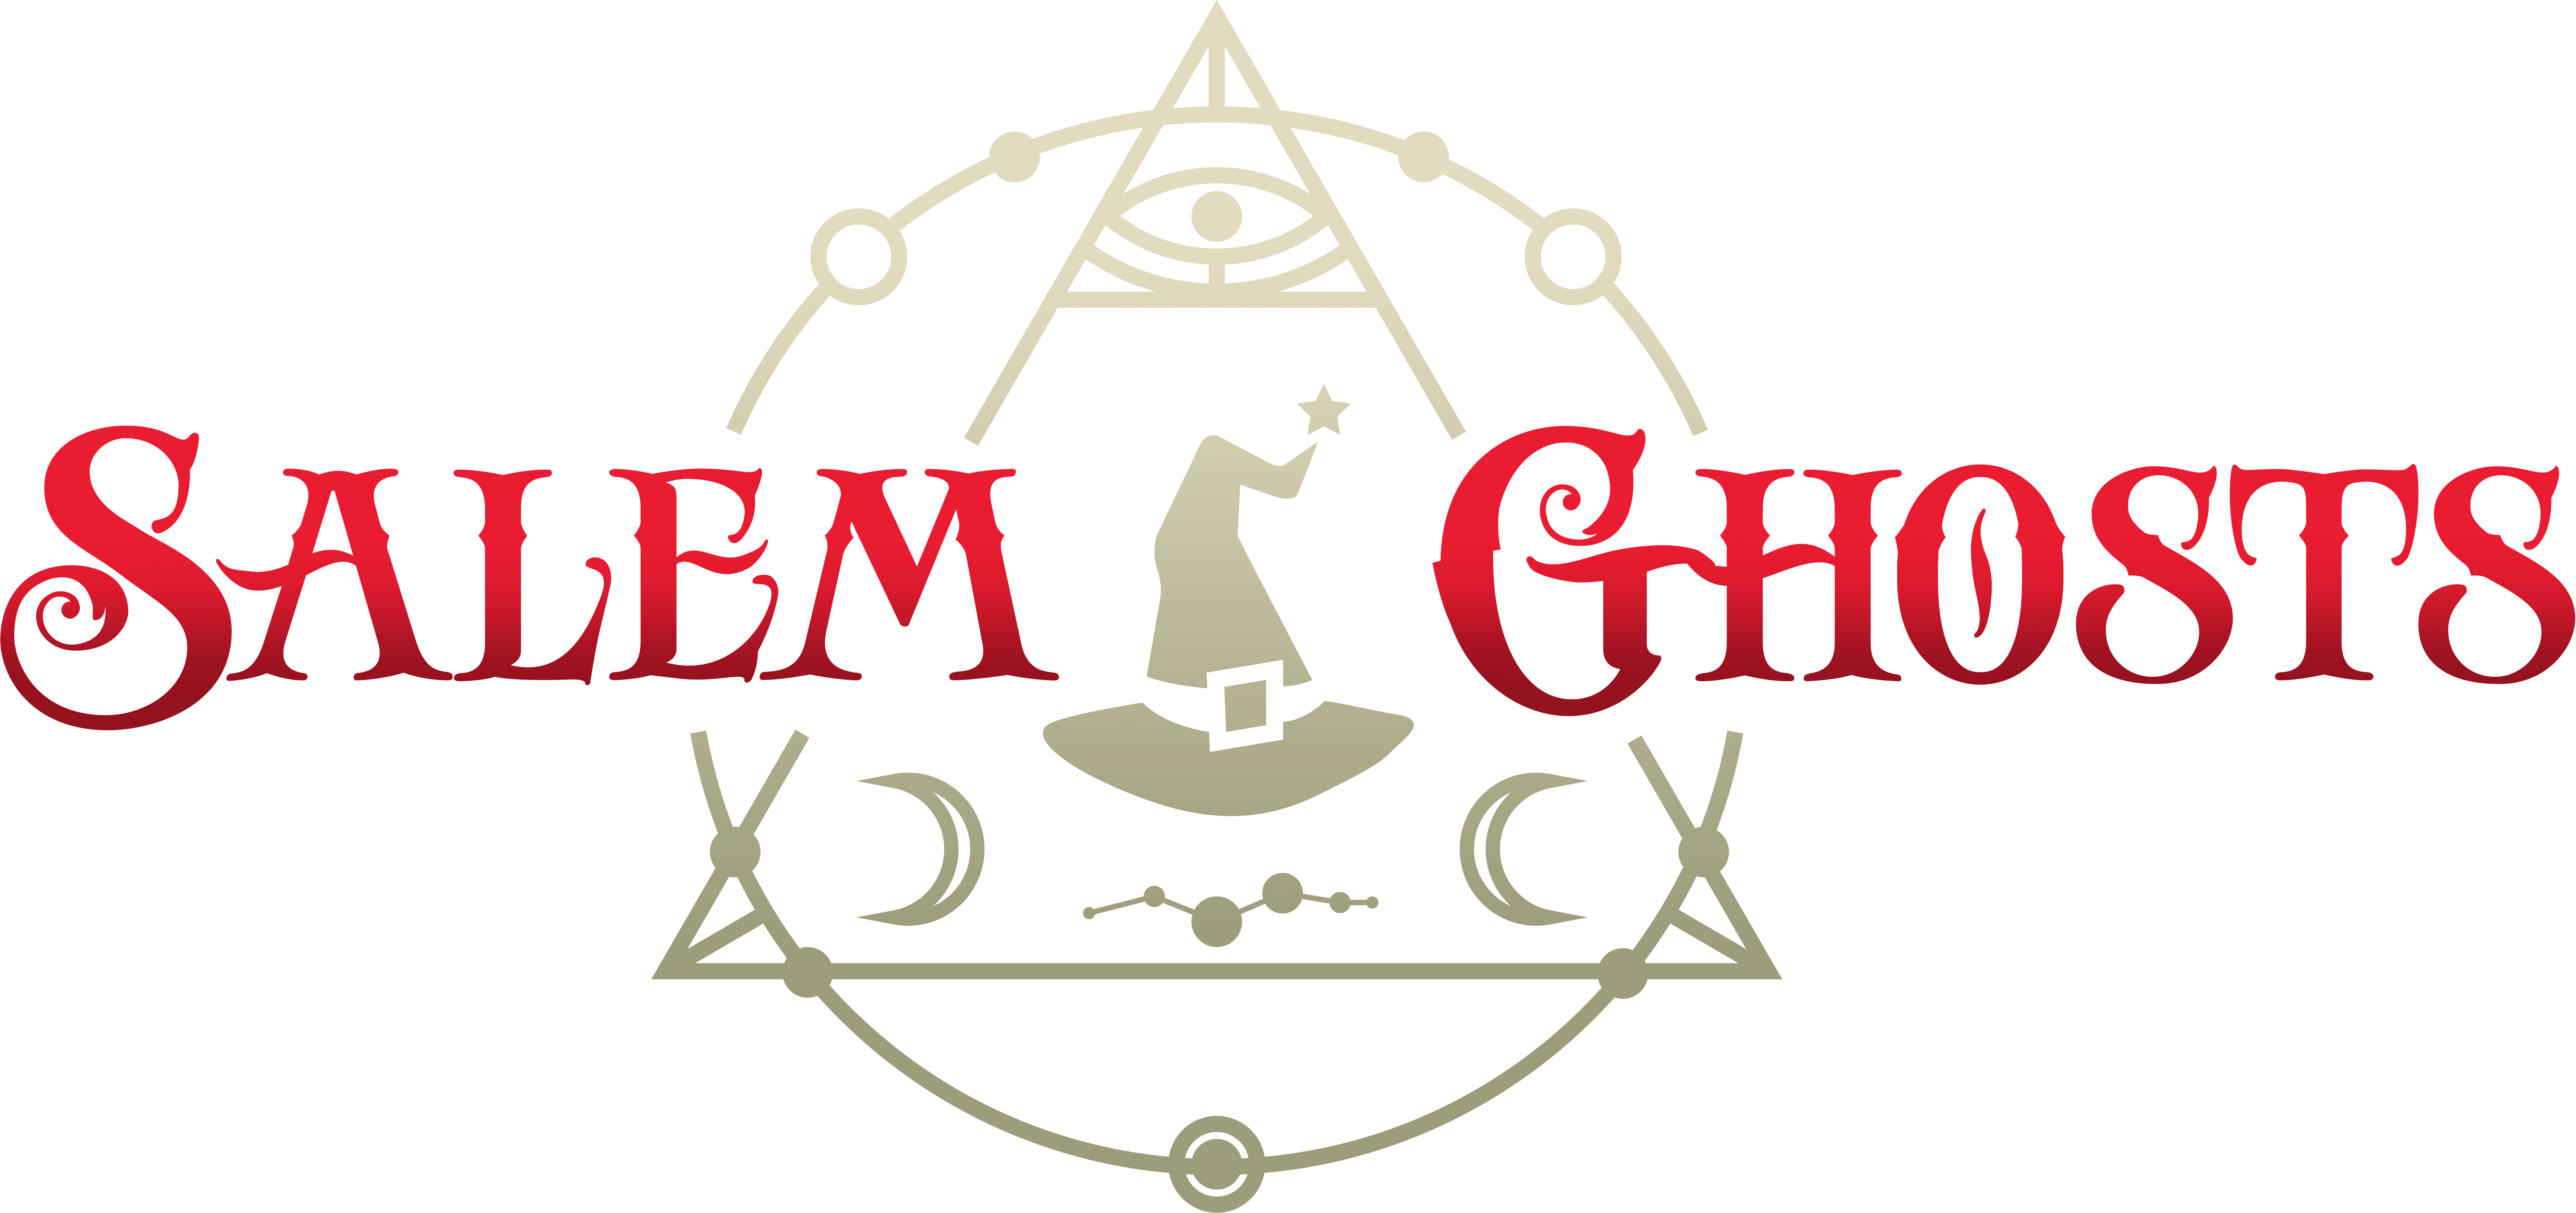 Salem Ghost Tours Logo